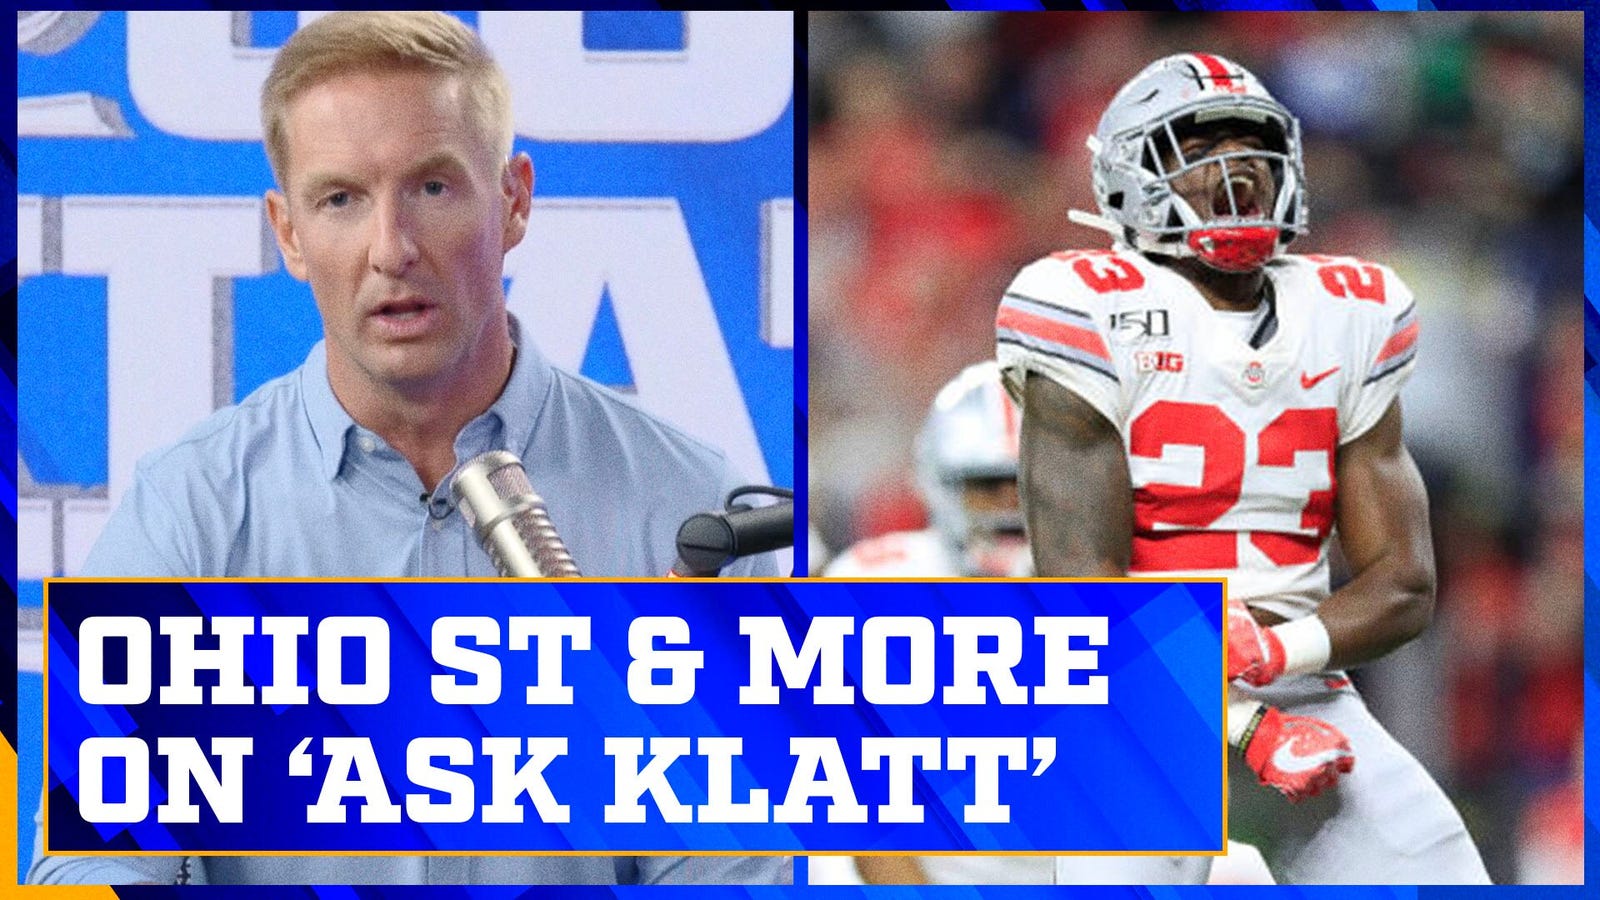 Ohio State, Michigan, and the Sun Belt conference on 'Ask Klatt'